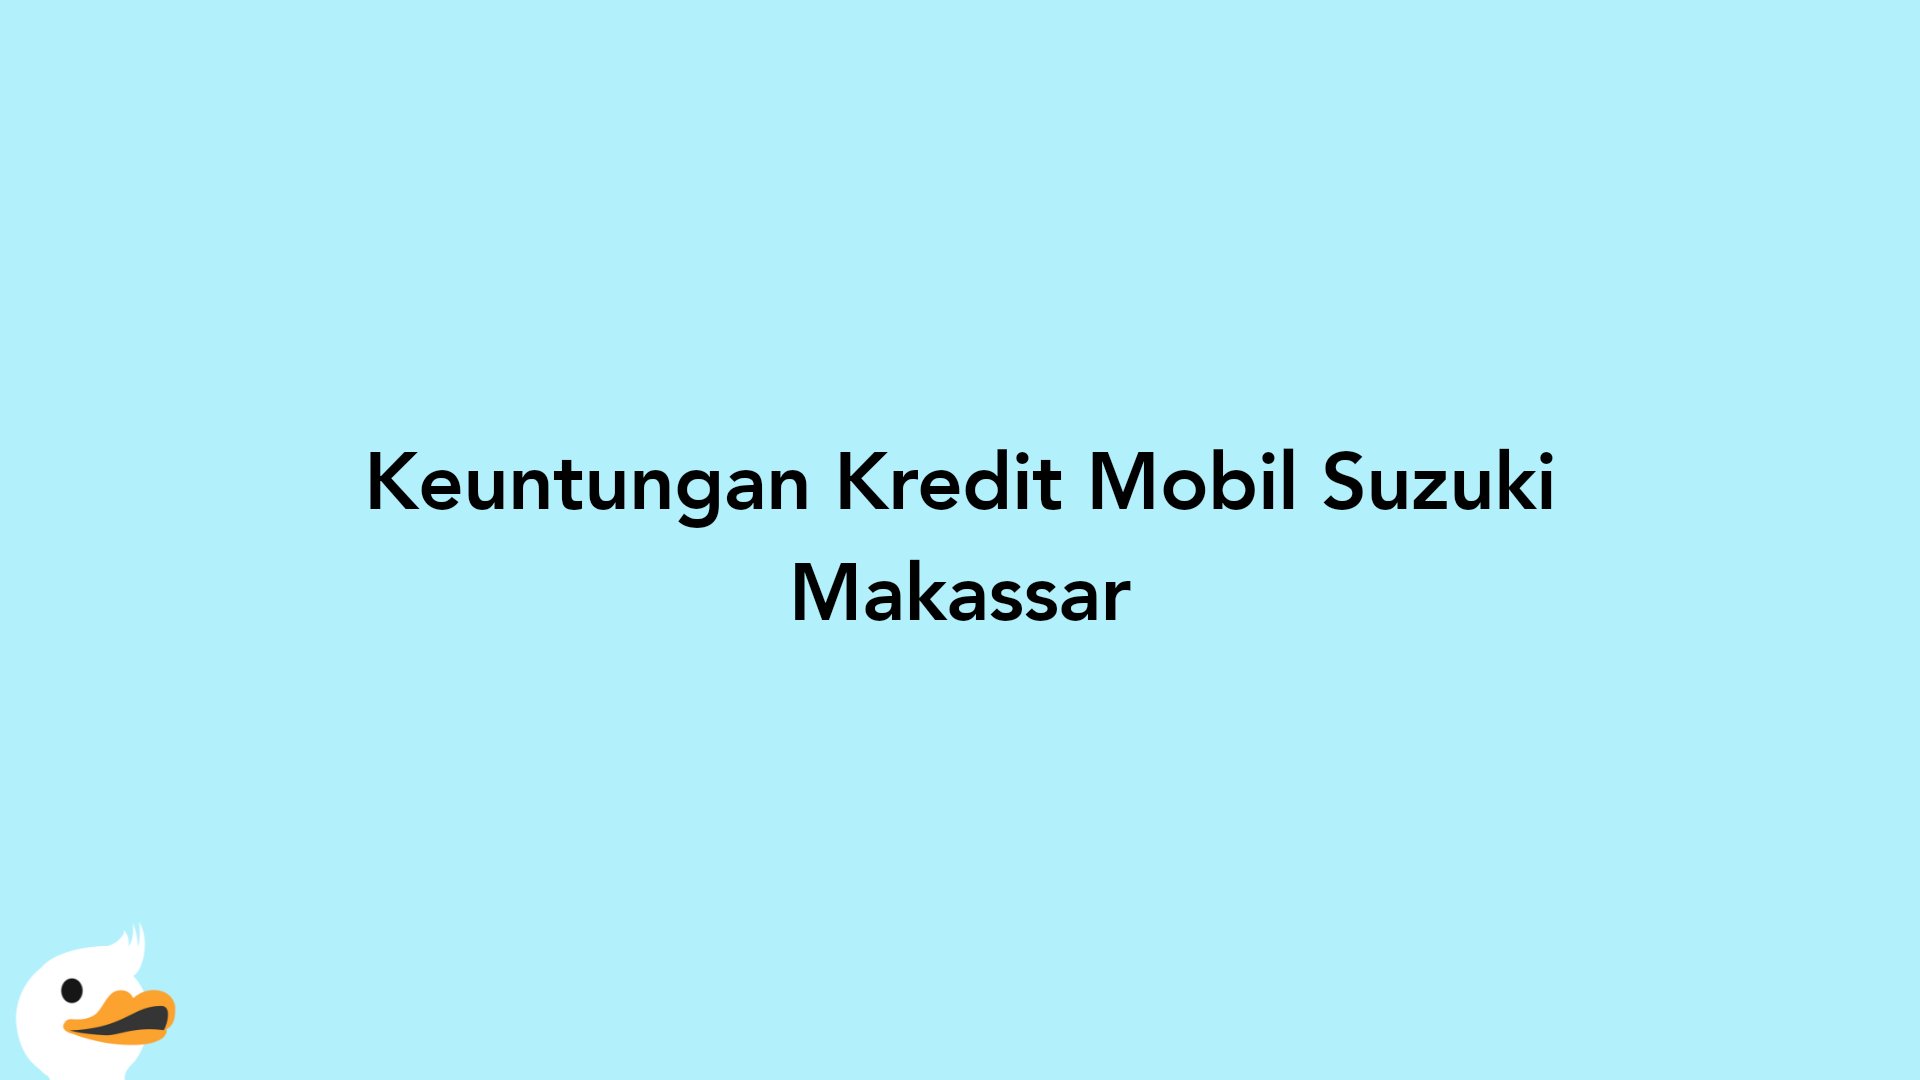 Keuntungan Kredit Mobil Suzuki Makassar